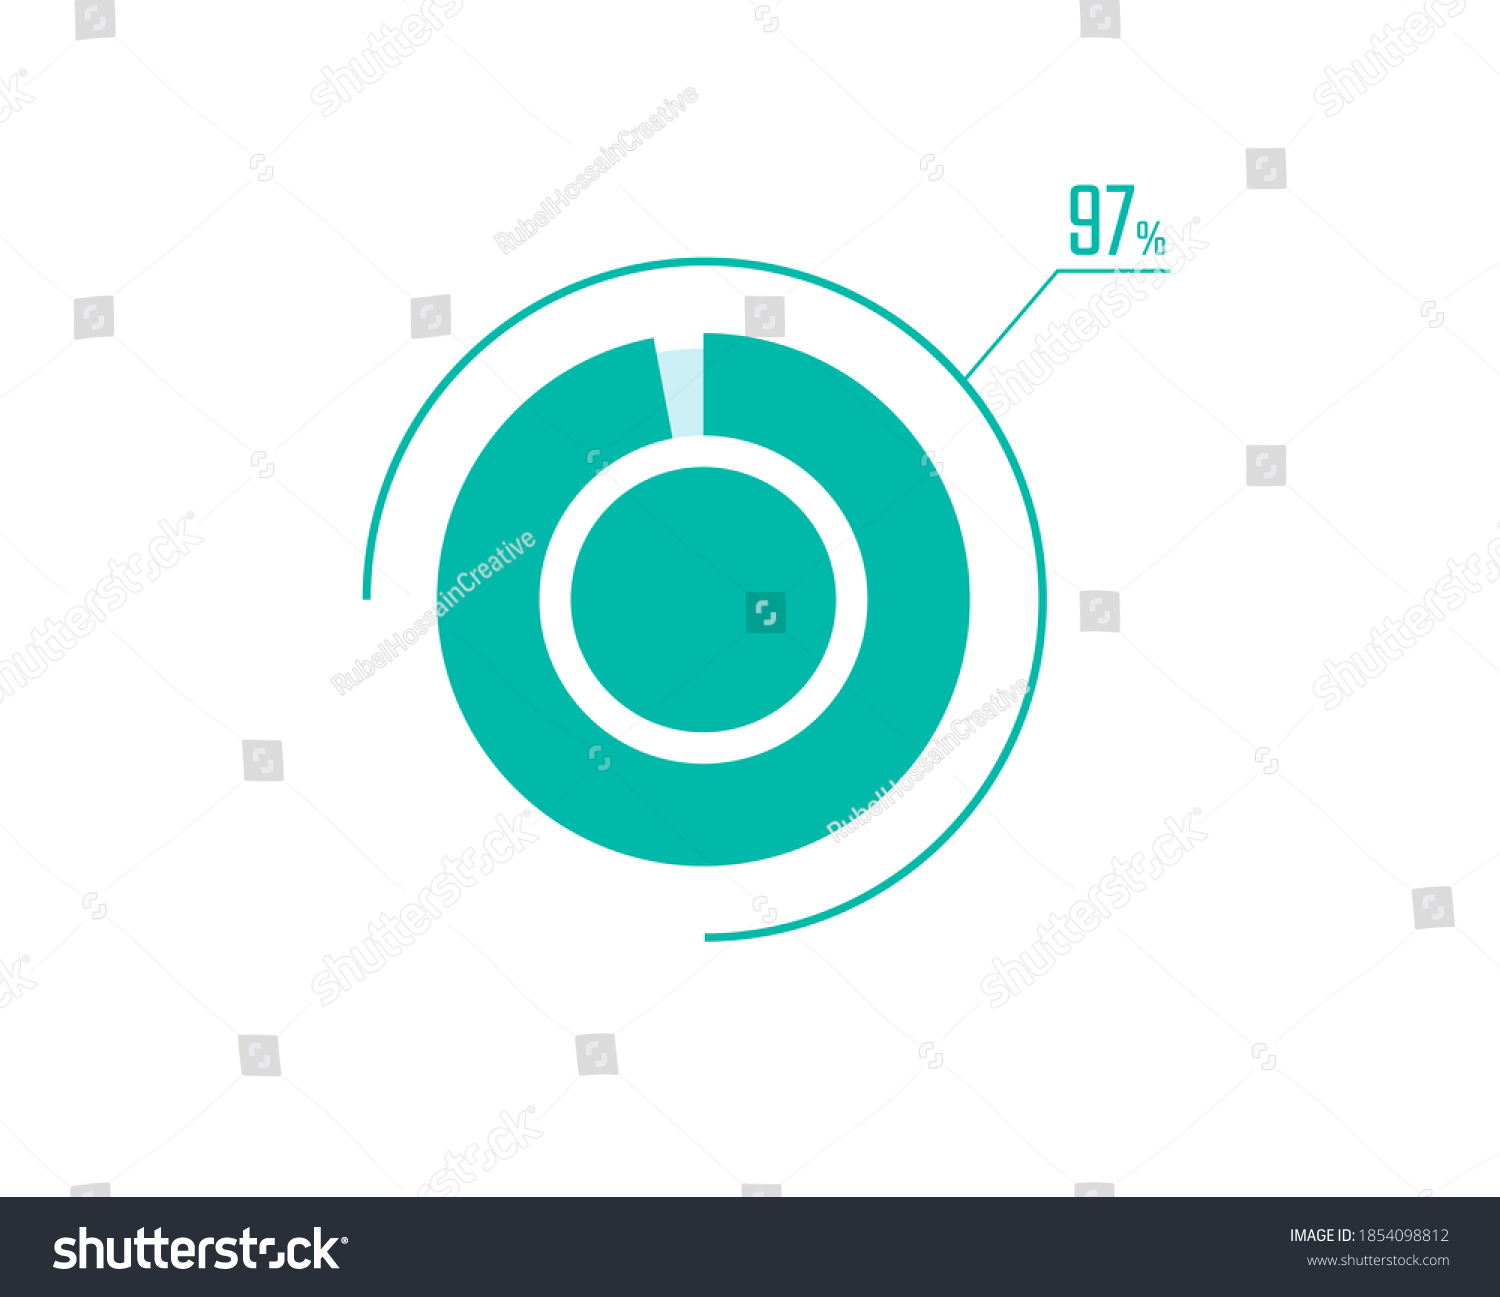 SVG of Circle Pie Chart showing 97 Percentage diagram infographic, UI, Web design. 97% Progress bar templates. Vector illustration svg